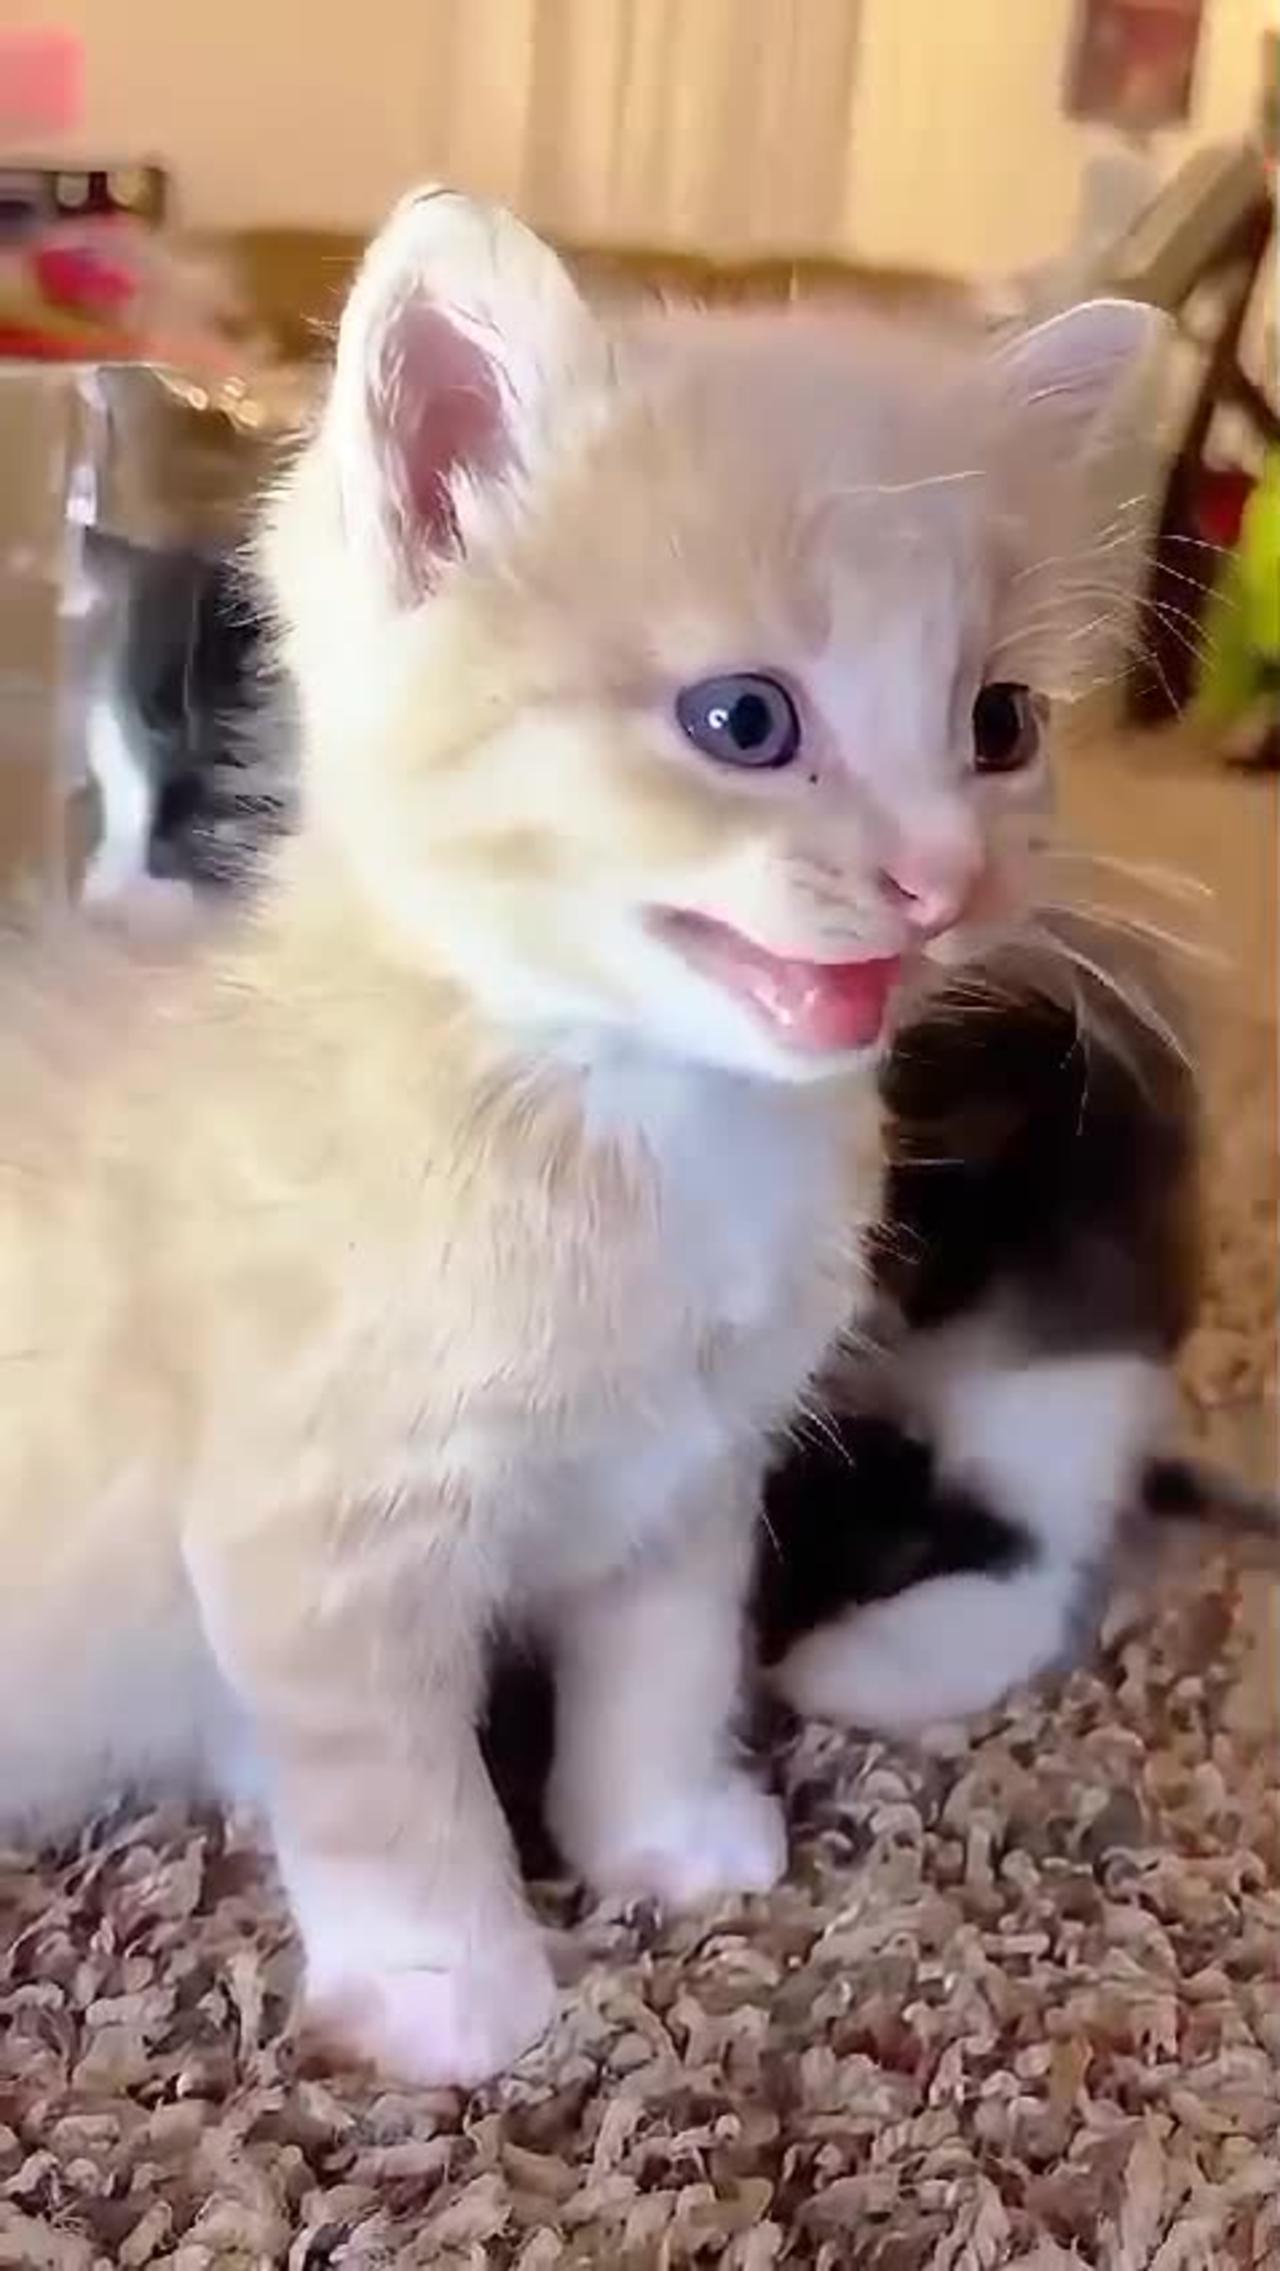 Cute baby kittens 🤗🥰🥰